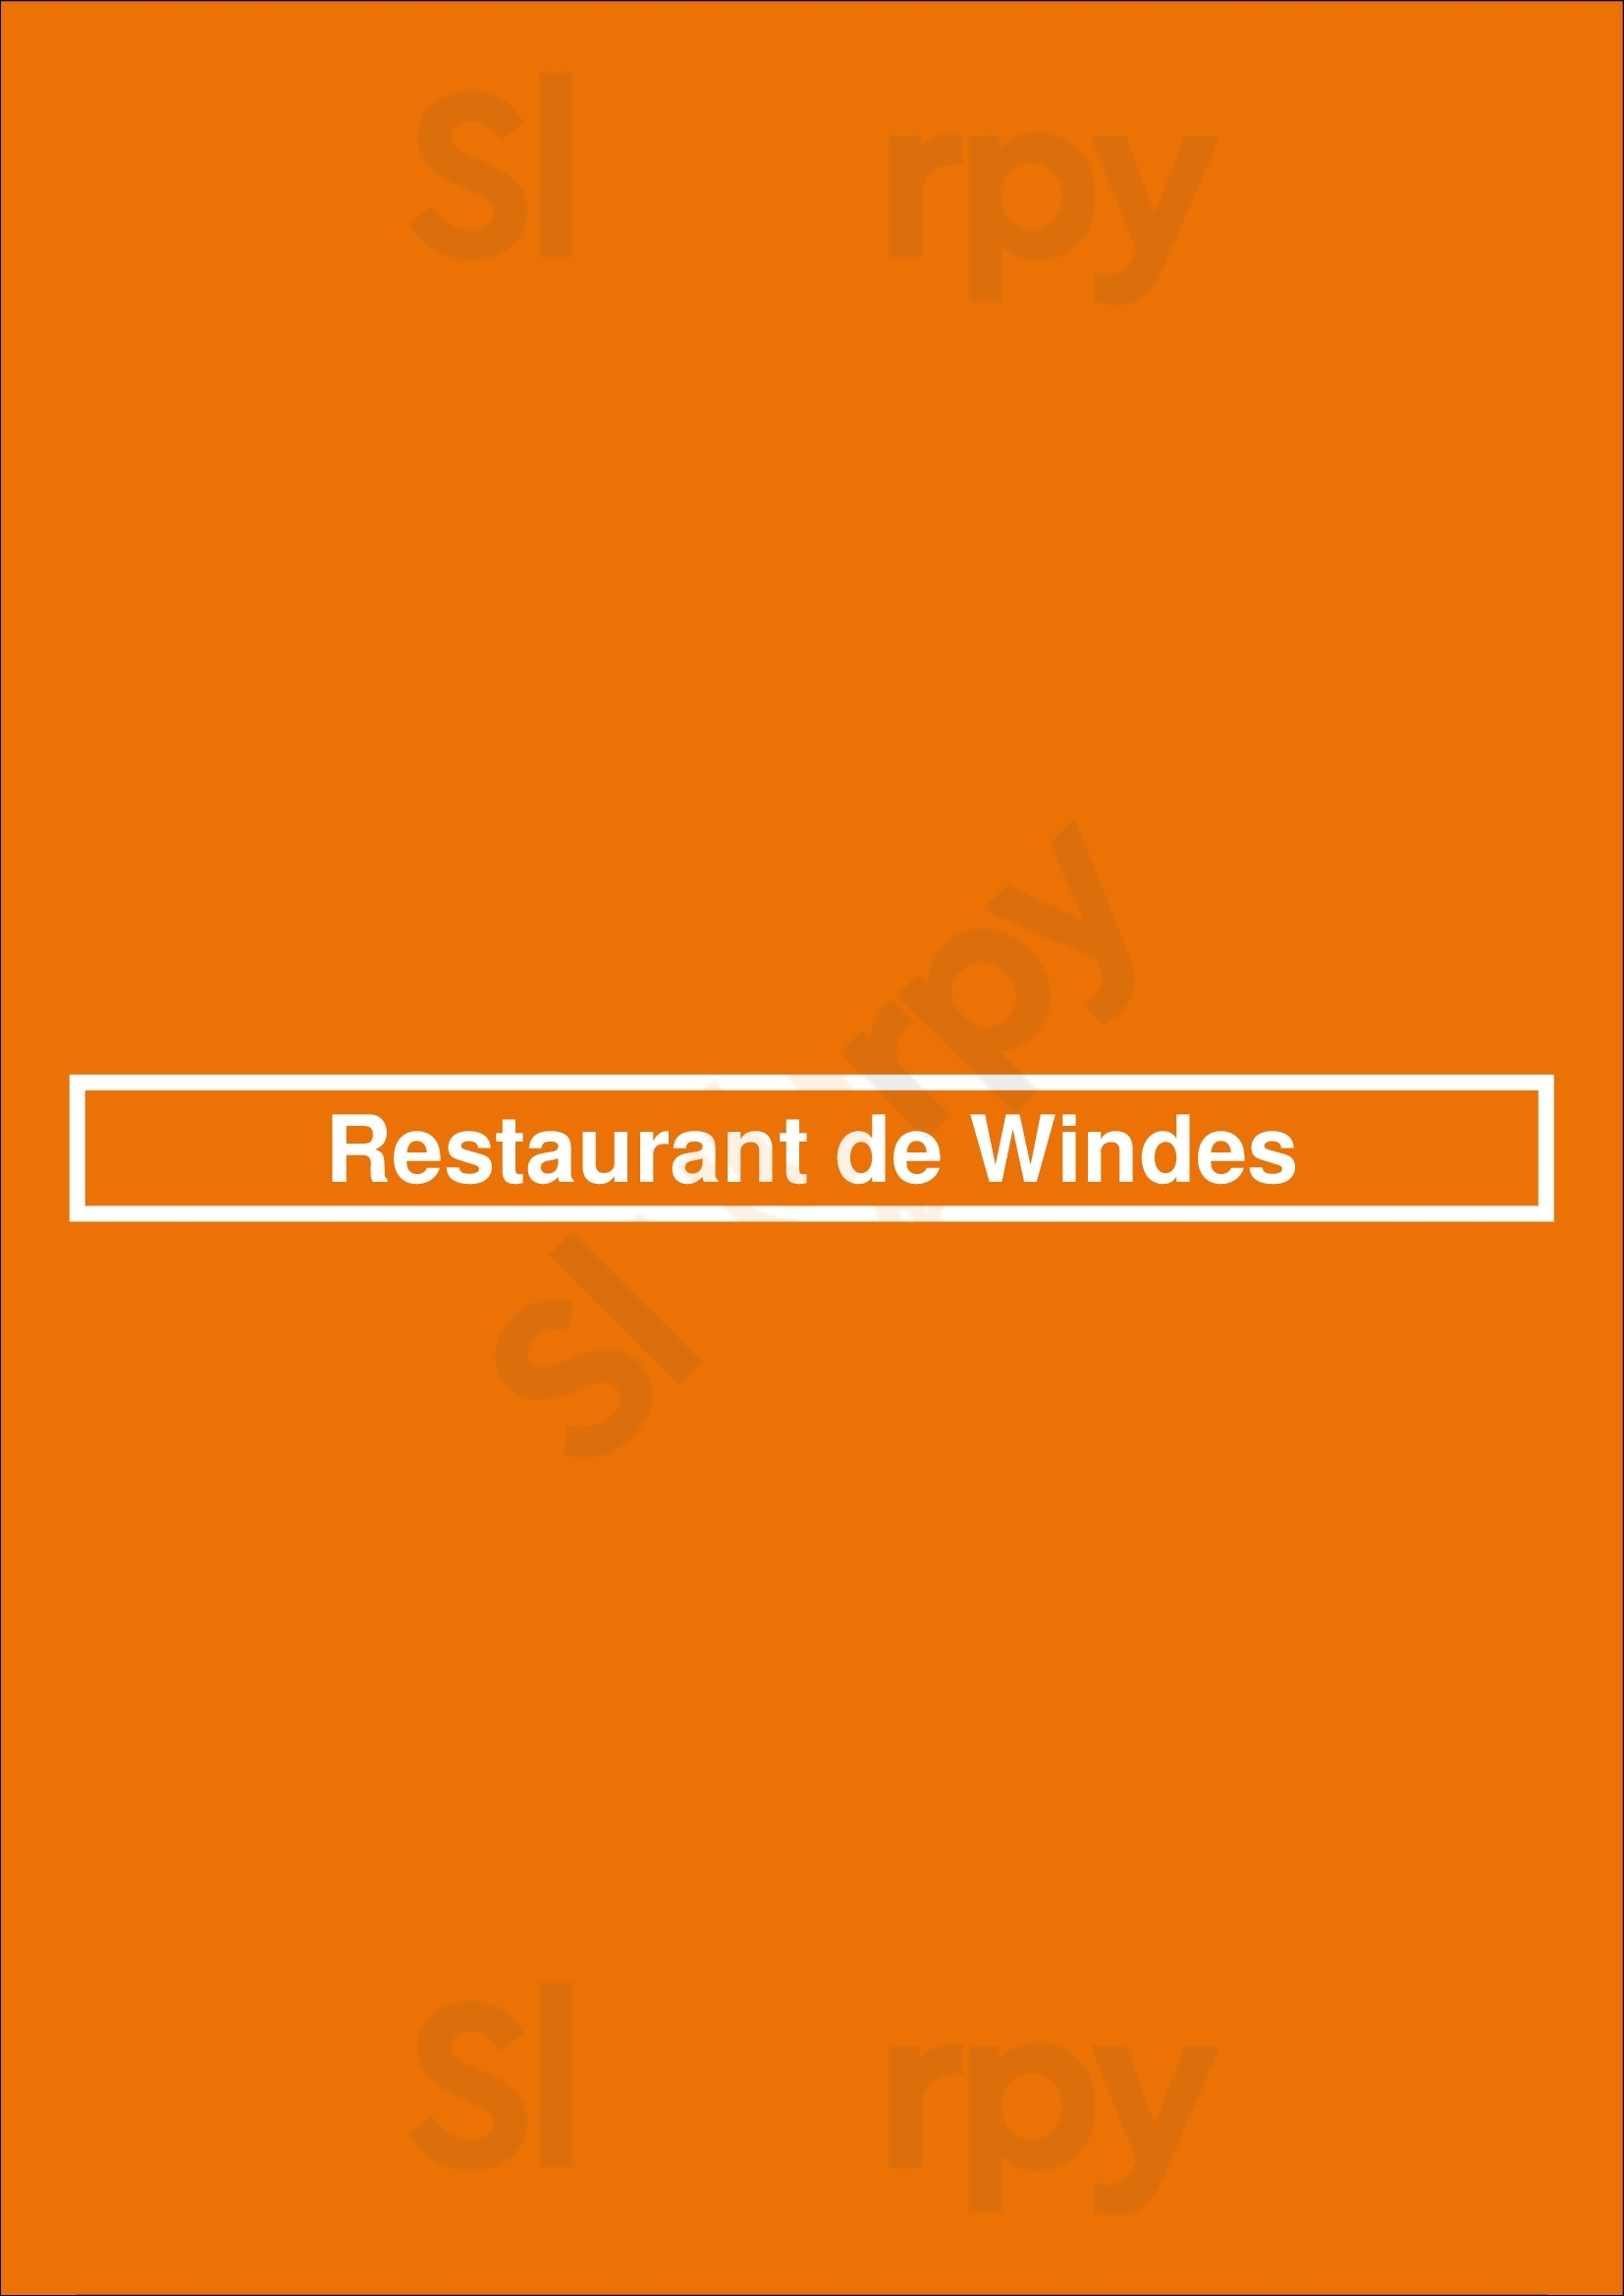 Restaurant De Windes Den Haag Menu - 1